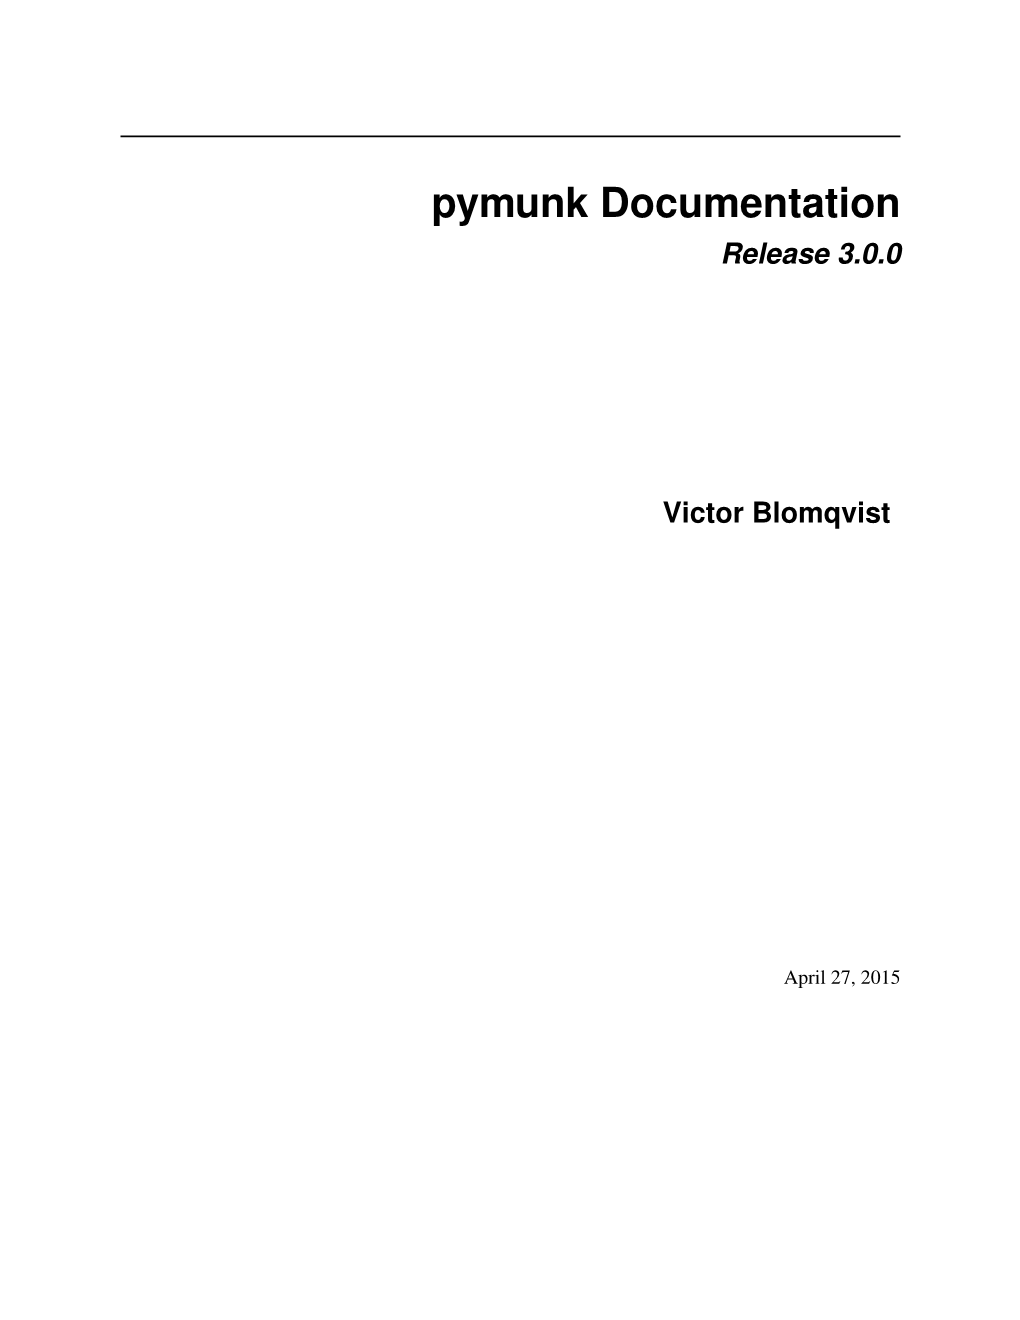 Pymunk Documentation Release 3.0.0